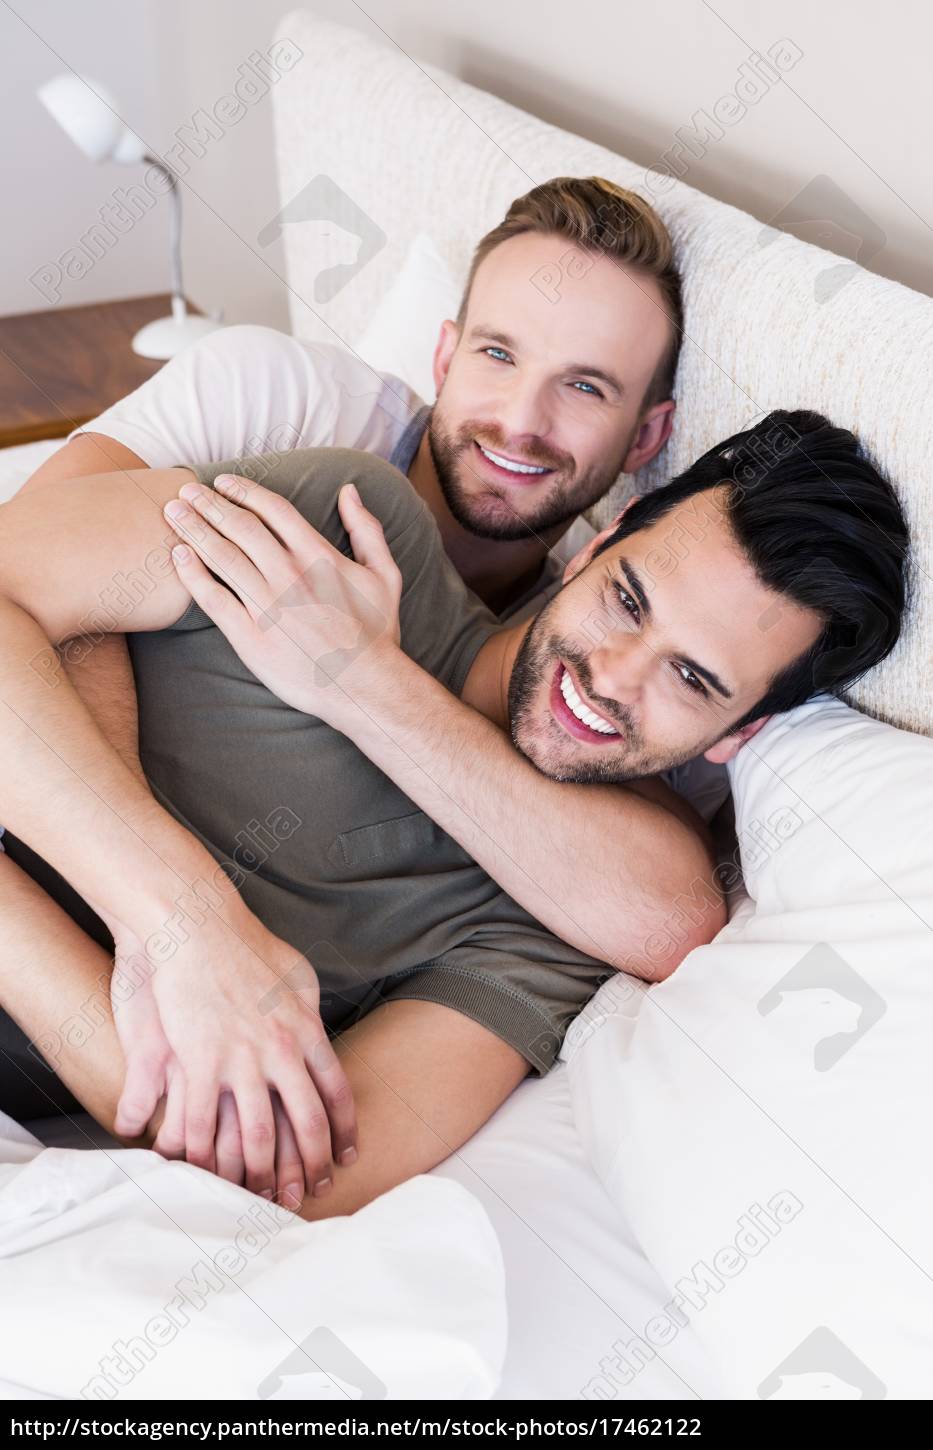 Kematen in tirol gay dating: Matzen-raggendorf amerikaner 